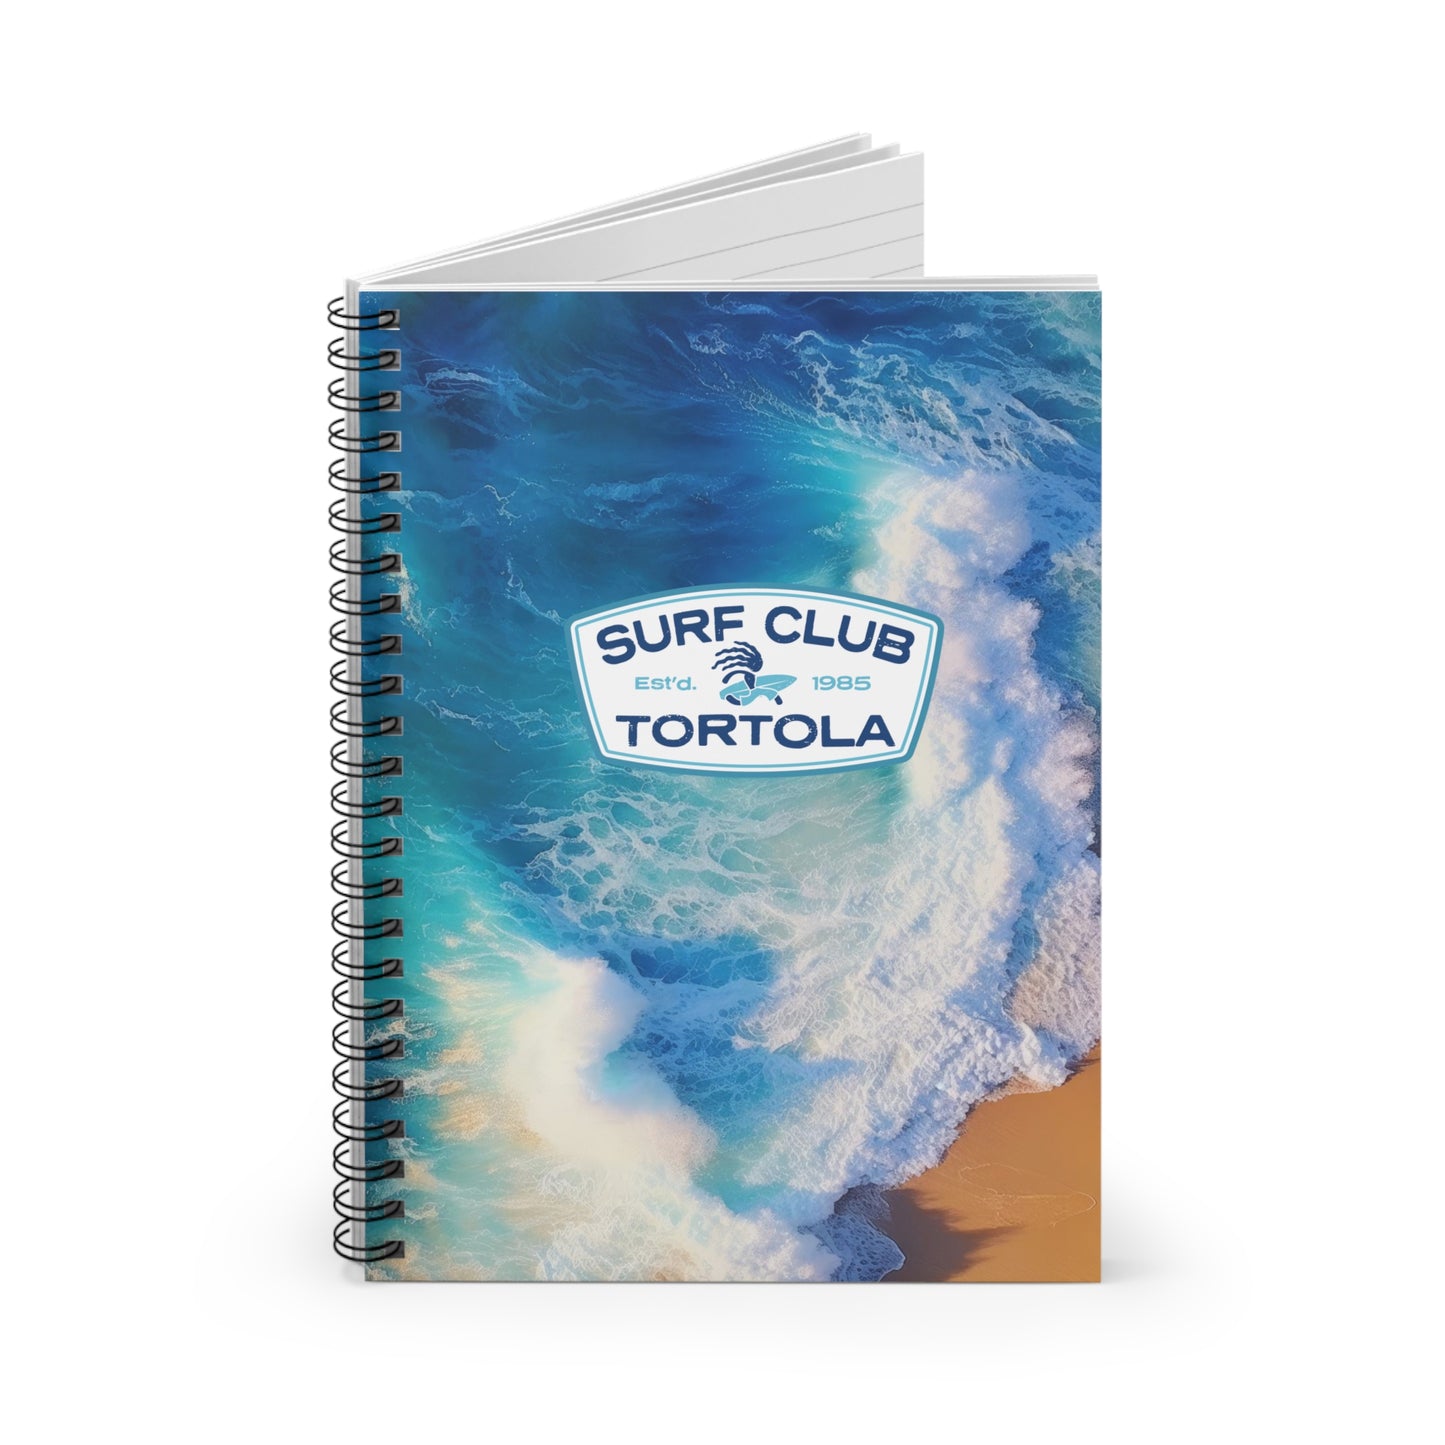 "Surf Club Tortola" Spiral Notebook - Ruled Line